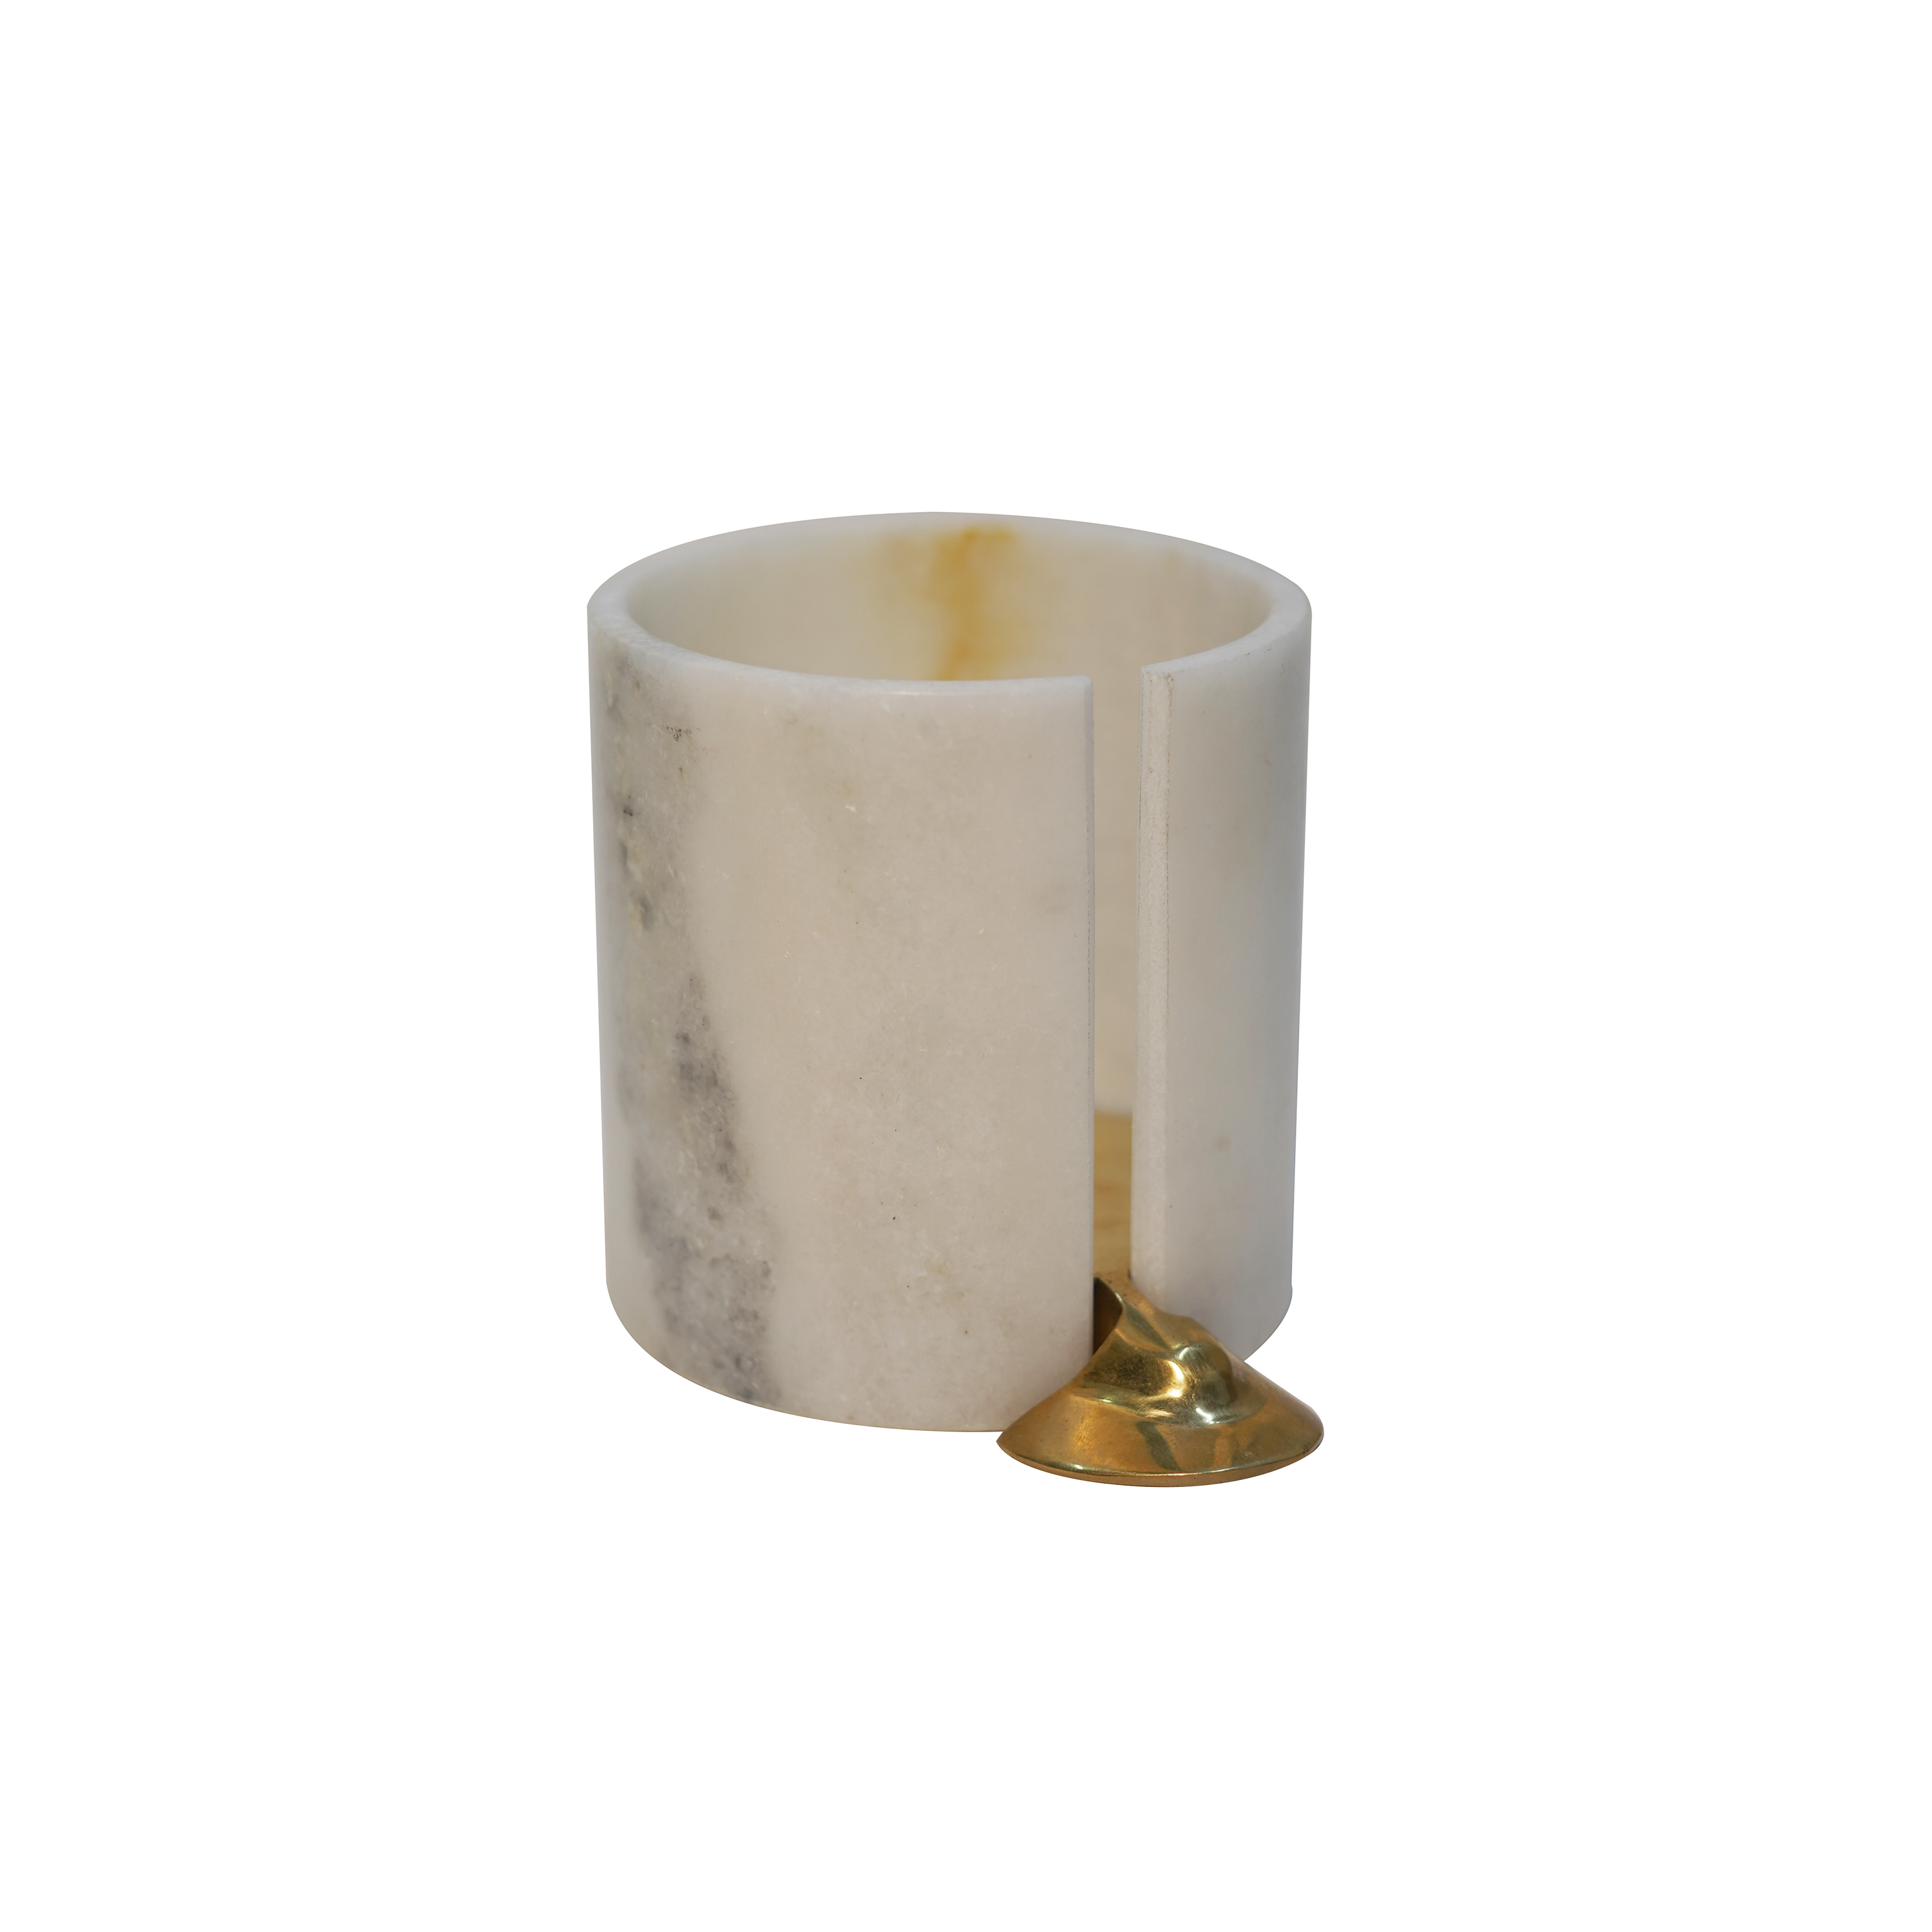 Melting Wax Marble Tealight Holder Tableware Lighting & Fragrances